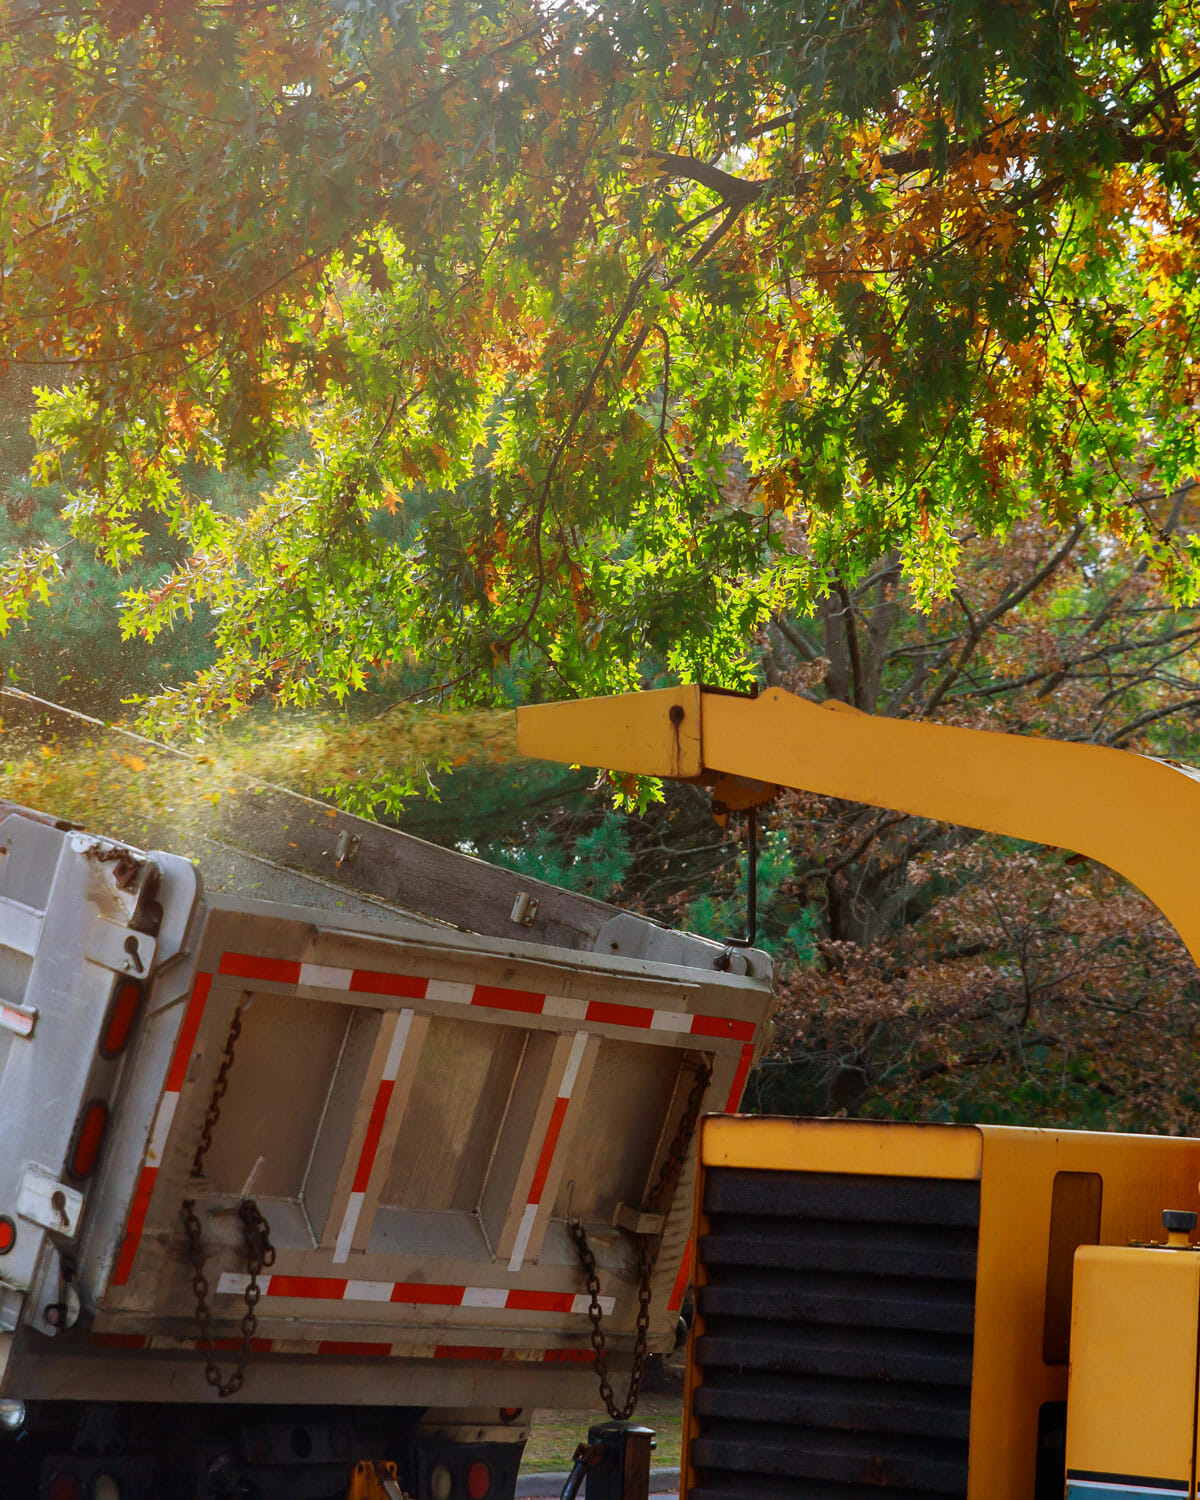 Yellow machine blows woodchips into dump truck